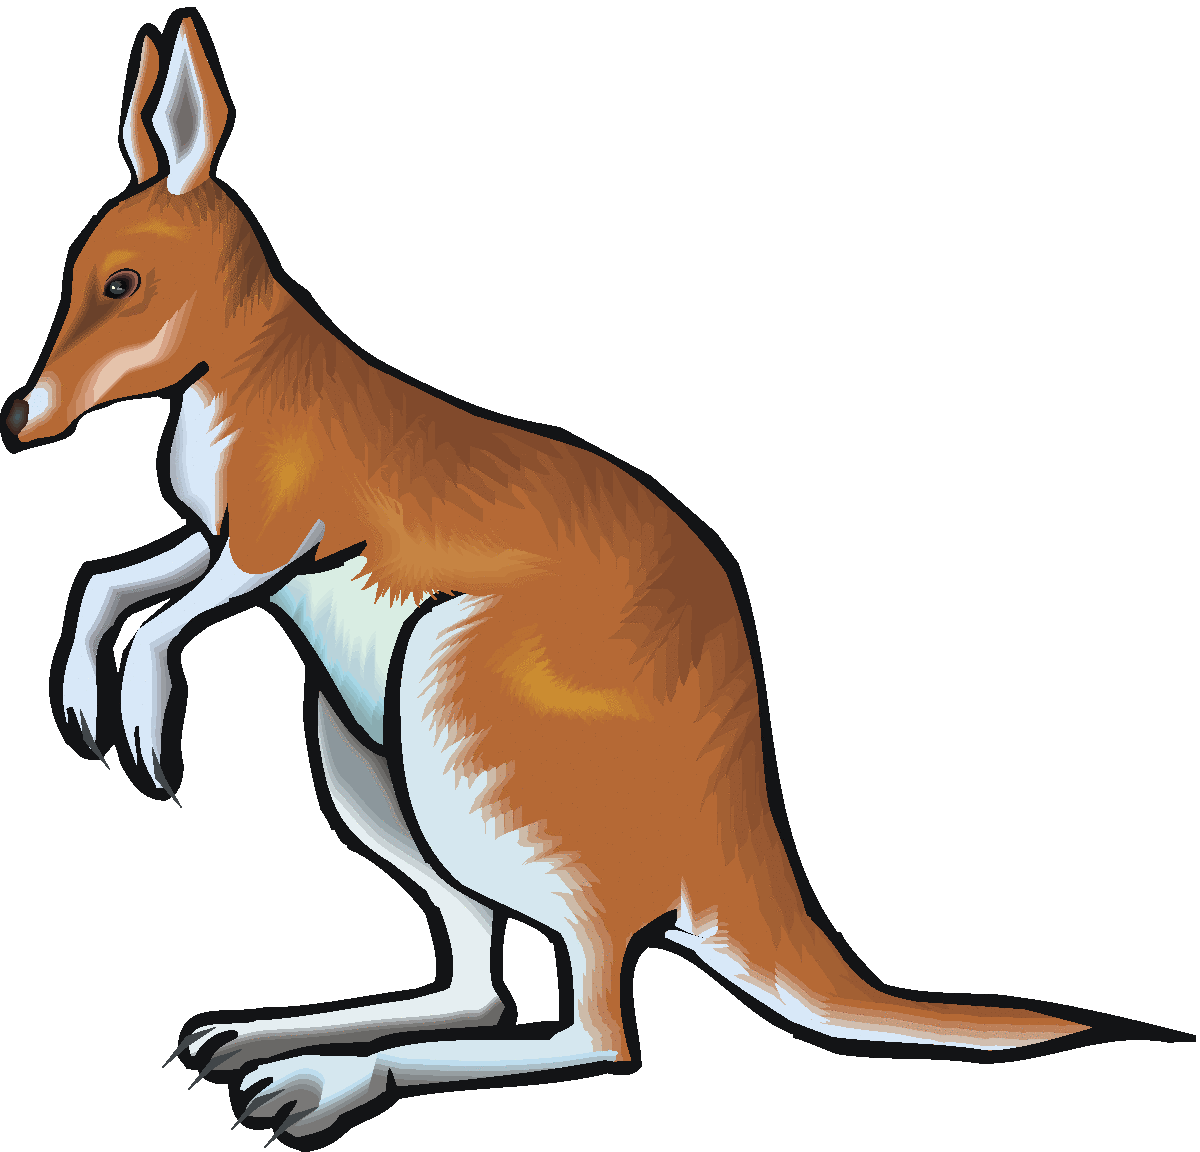 kangaroo face clipart - photo #27